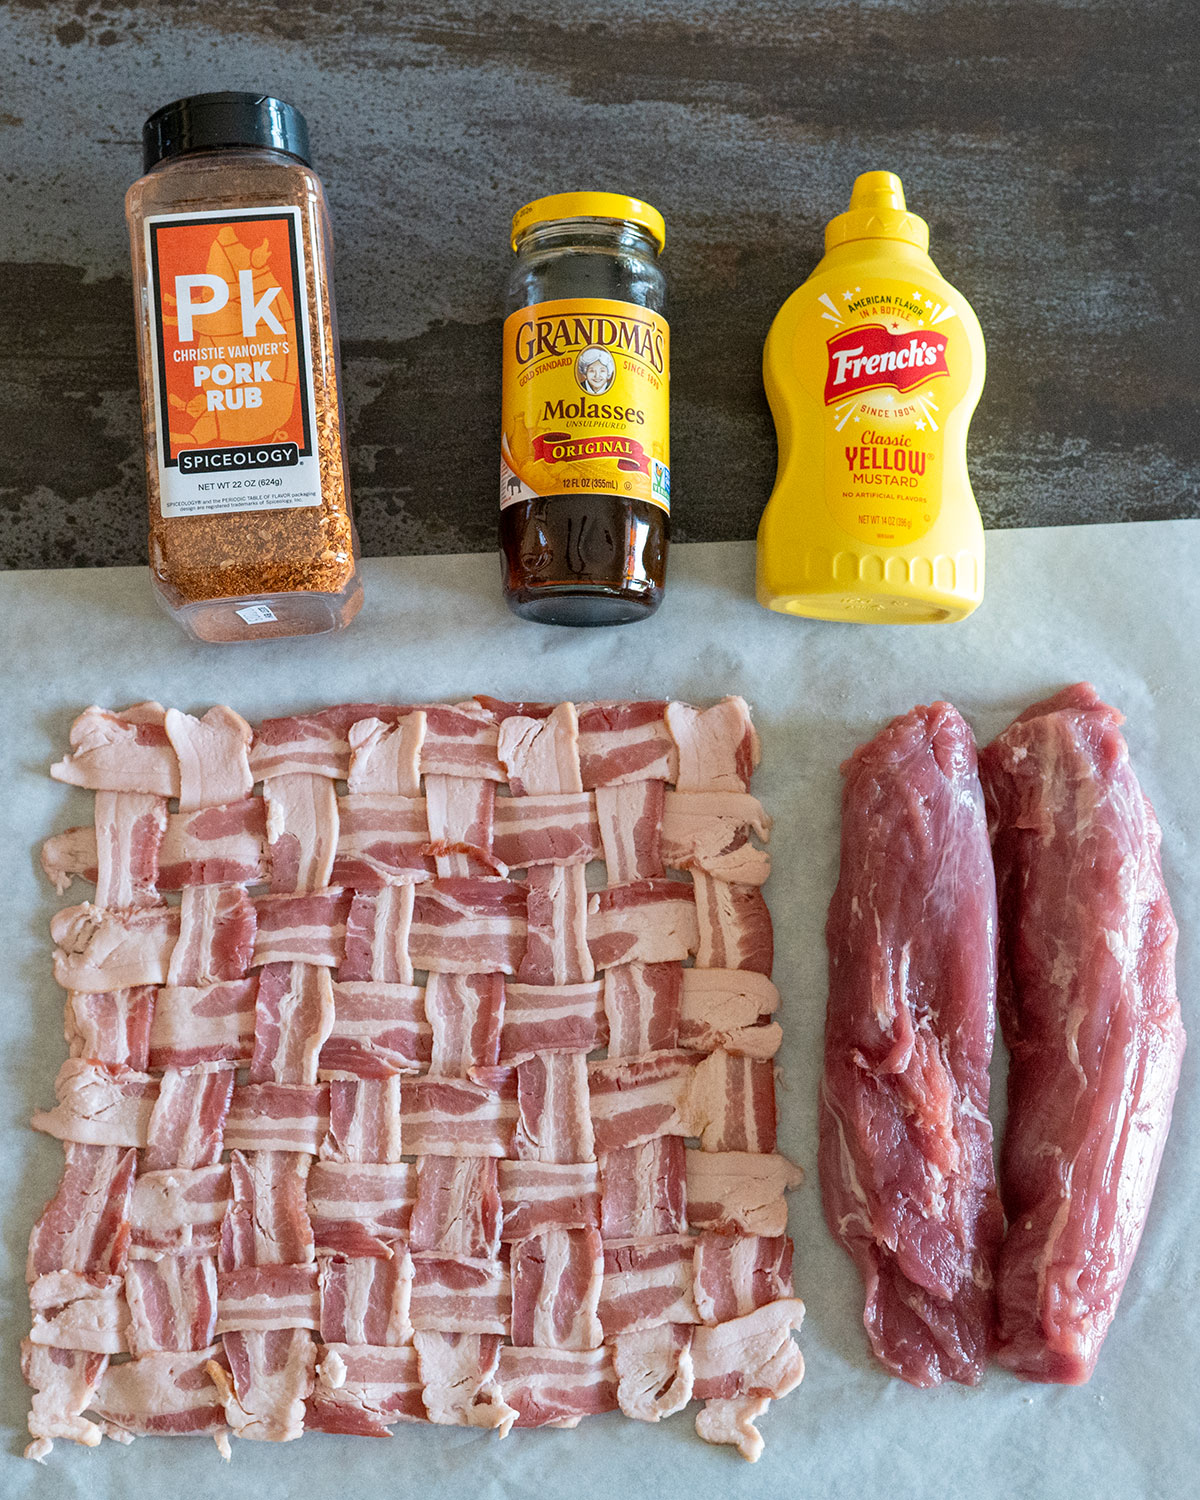 bacon weave, pork tenderloin, pork rub, molasses, mustard.